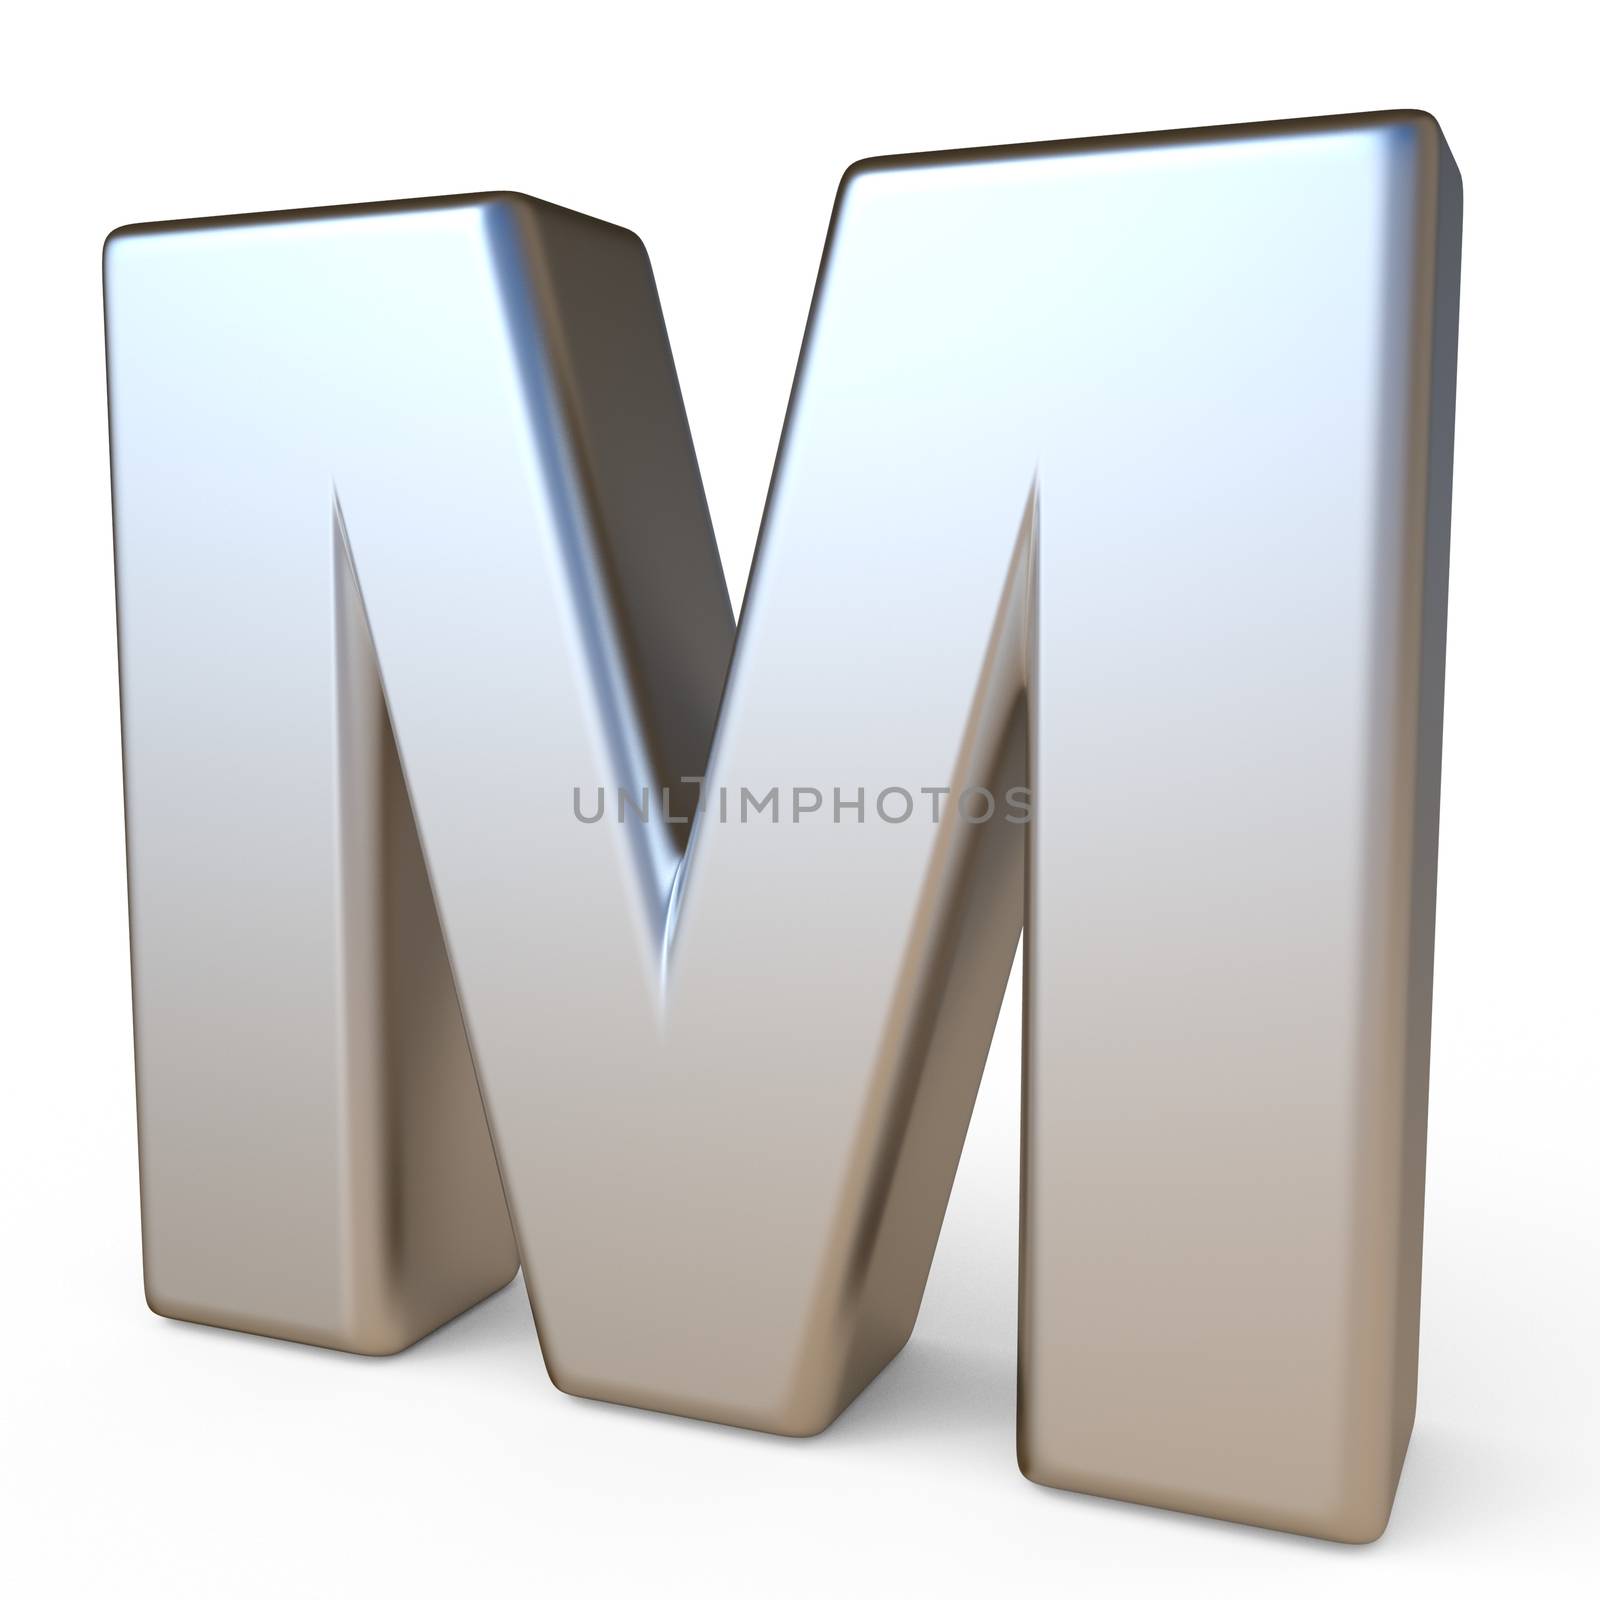 Metal font LETTER M 3D render illustration isolated on white background